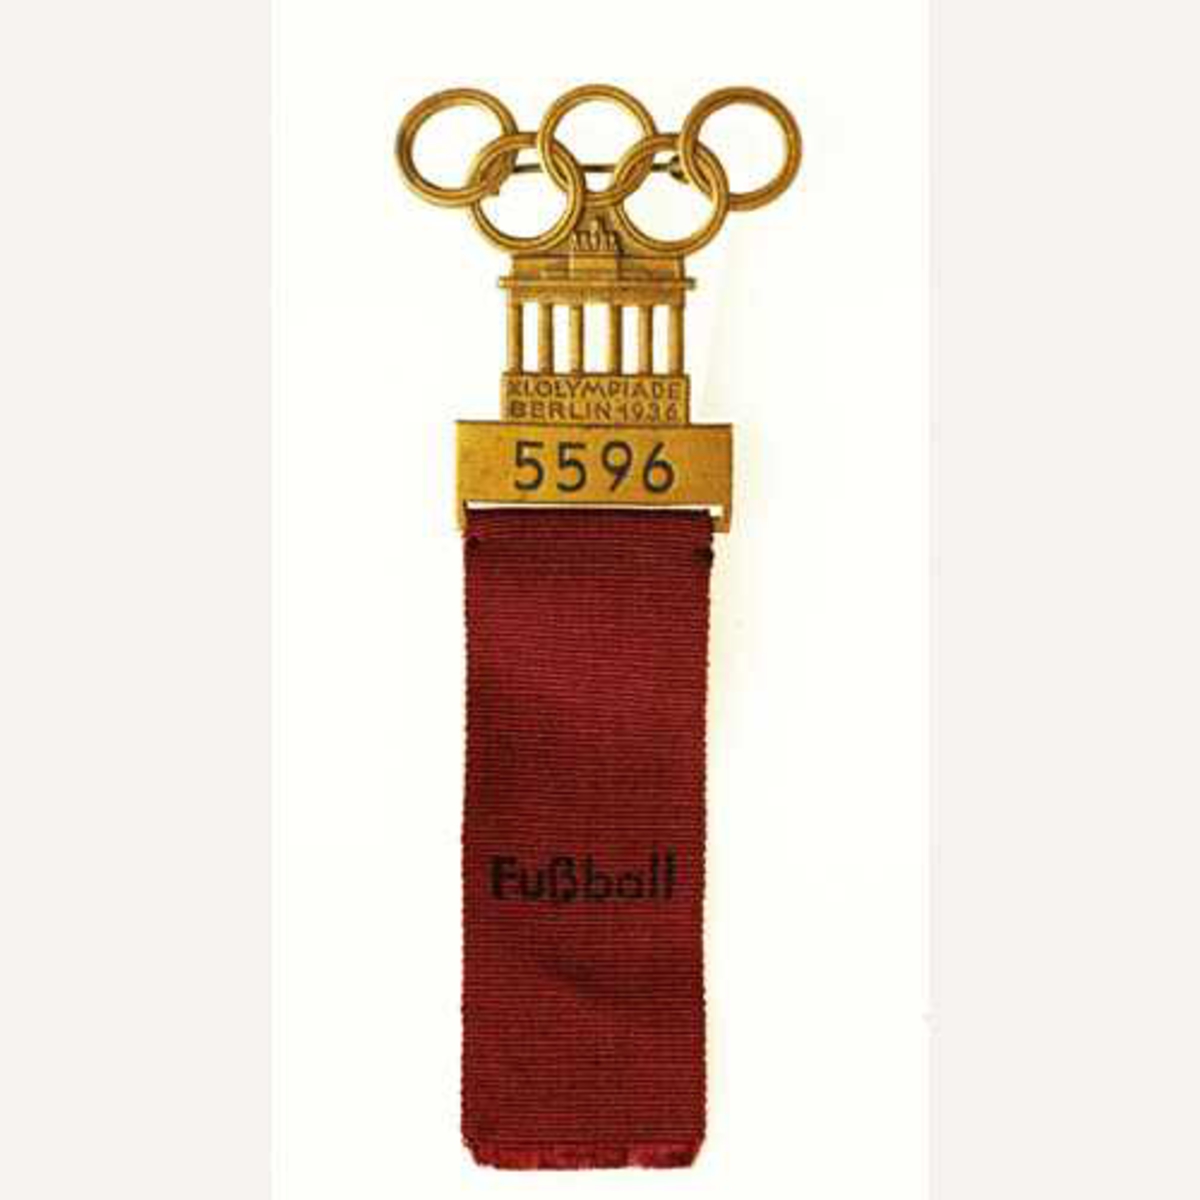 Metallspenne med Brandenburger Tor og olympiske ringer. Rødt bånd med "Fussball" under.